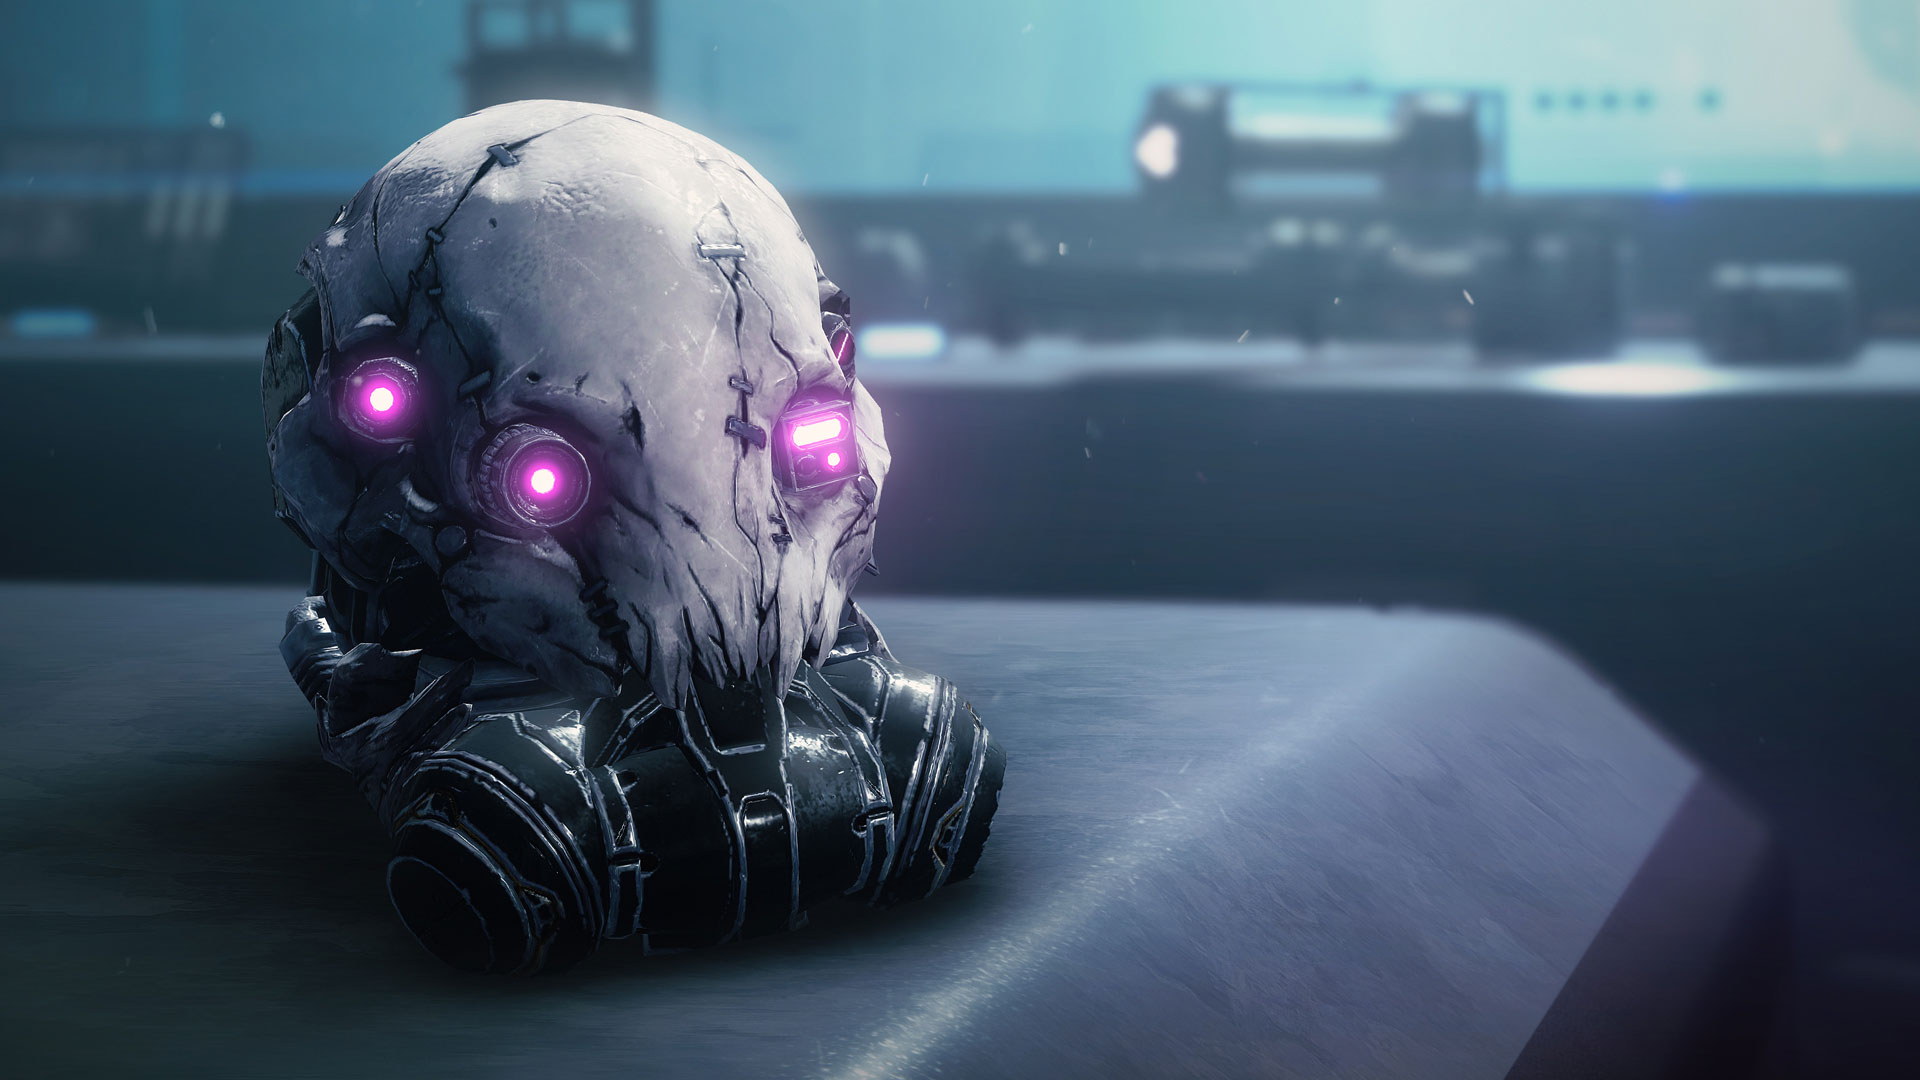 Destiny 2 Beyond Light Exotic armor: The Mask of Bakris placed on a desk.